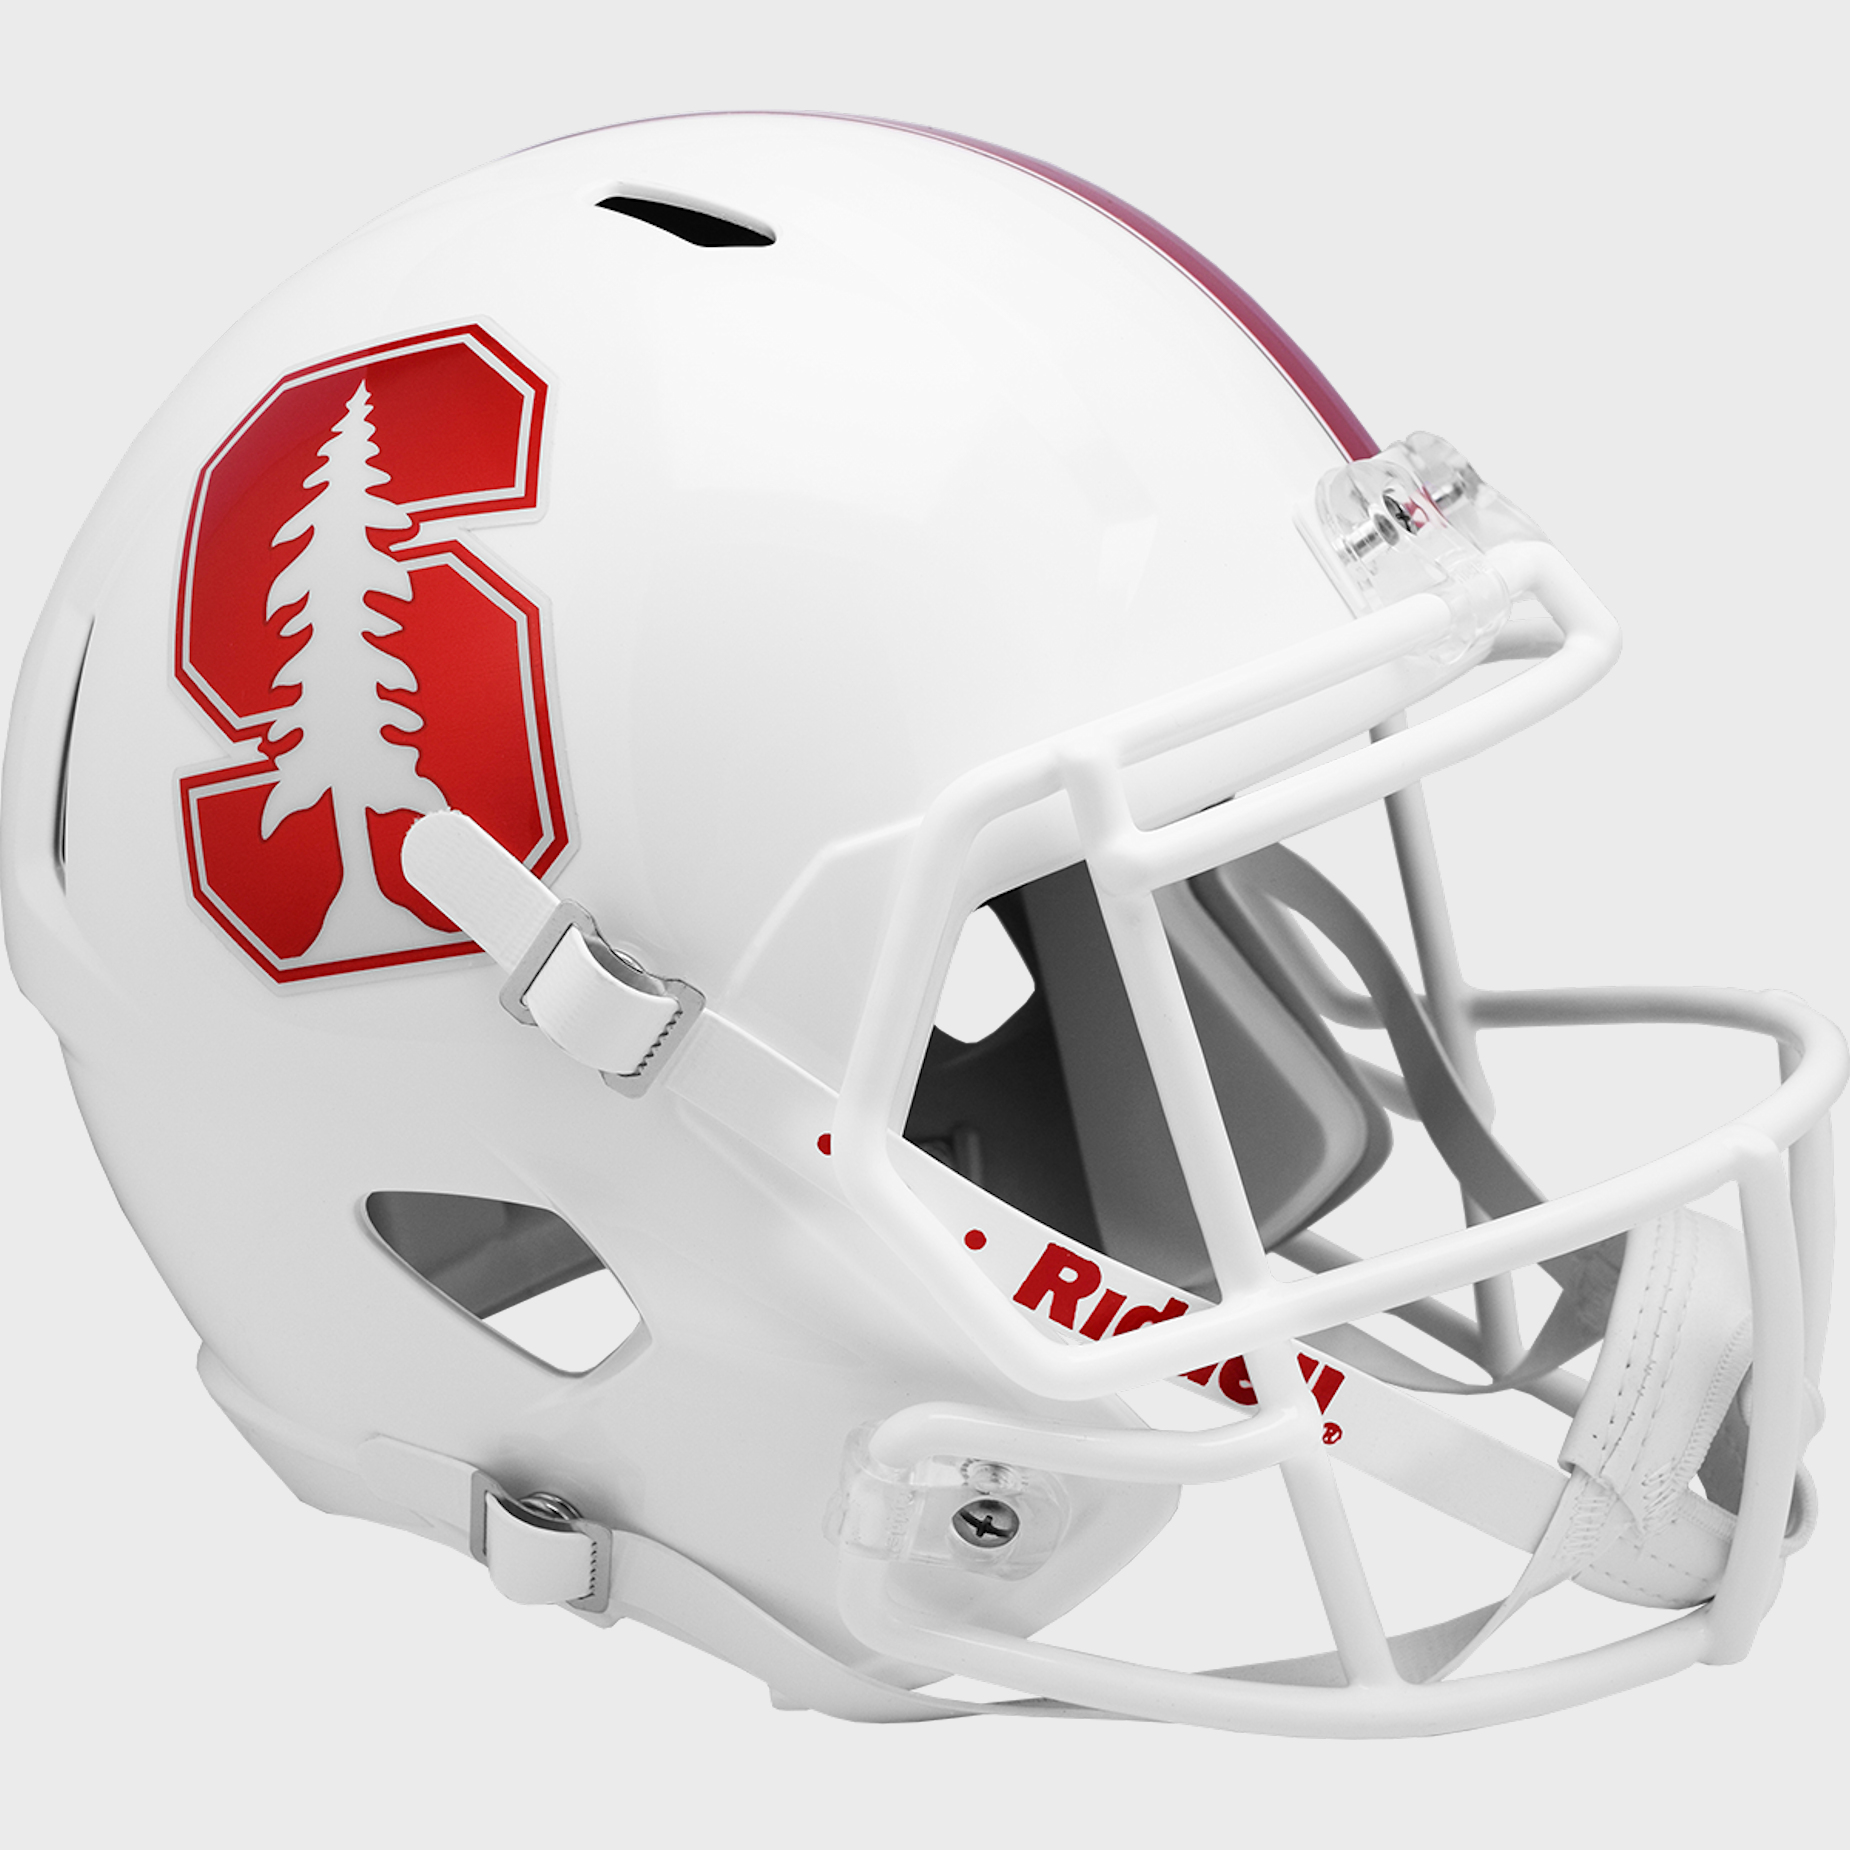 Stanford Cardinal full size replica helmet